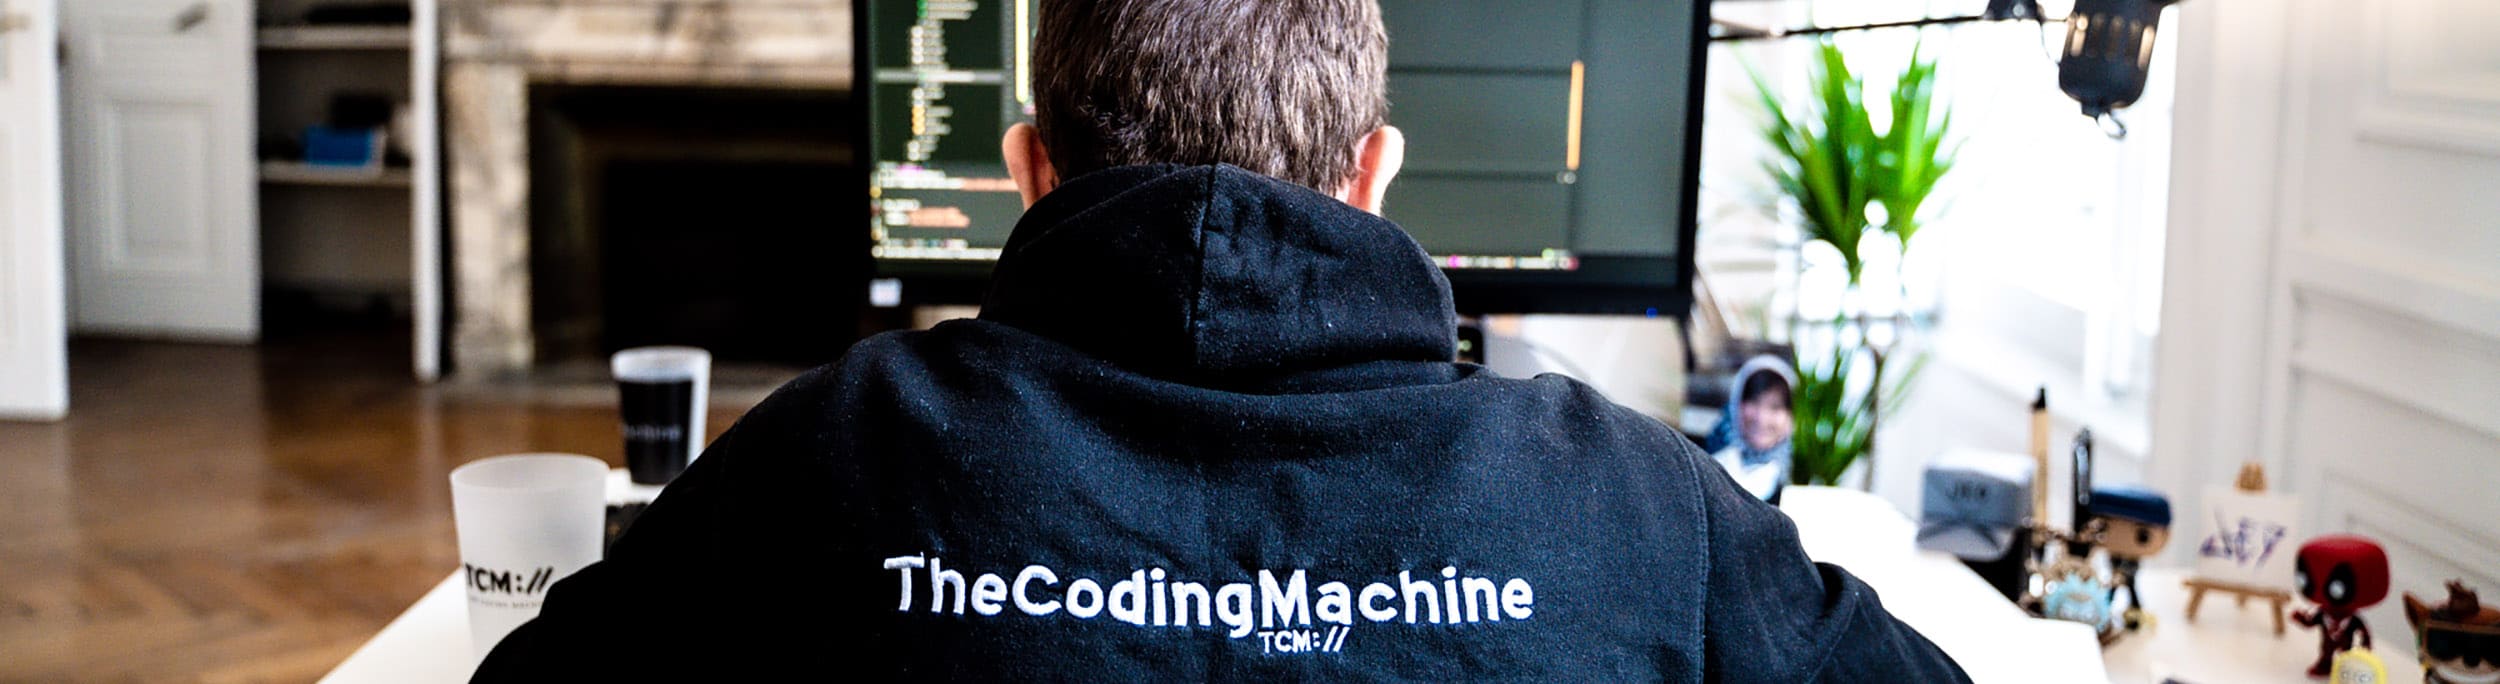 The Coding Machine Lyon, agence web et mobile à Lyon